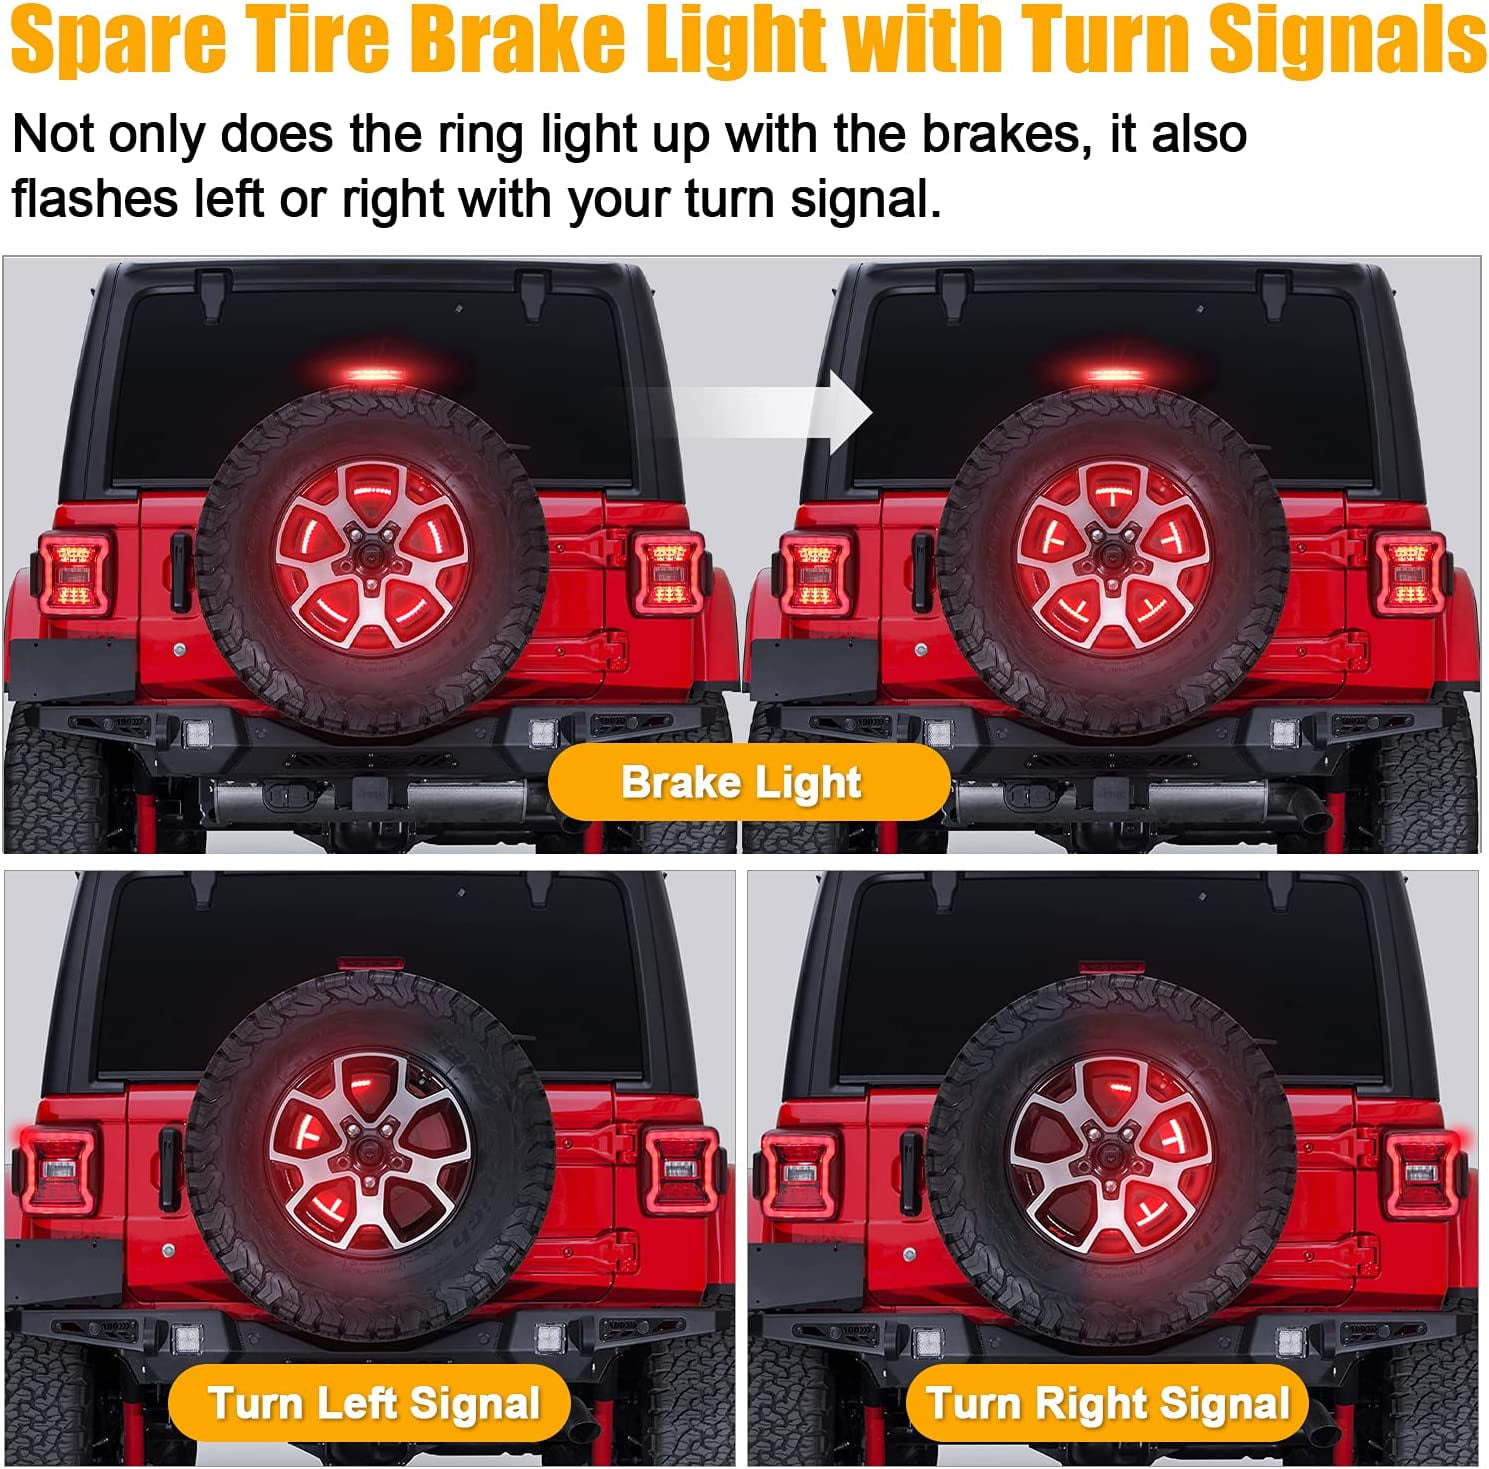 Spare Tire Brake Light with Turn Signal for 2007-2018 Jeep Wrangler JK YJ TJ  & 2018-2021 Jeep Wrangler JL, 3rd Third Brake Light LED Ring Rear Wheel  Light 